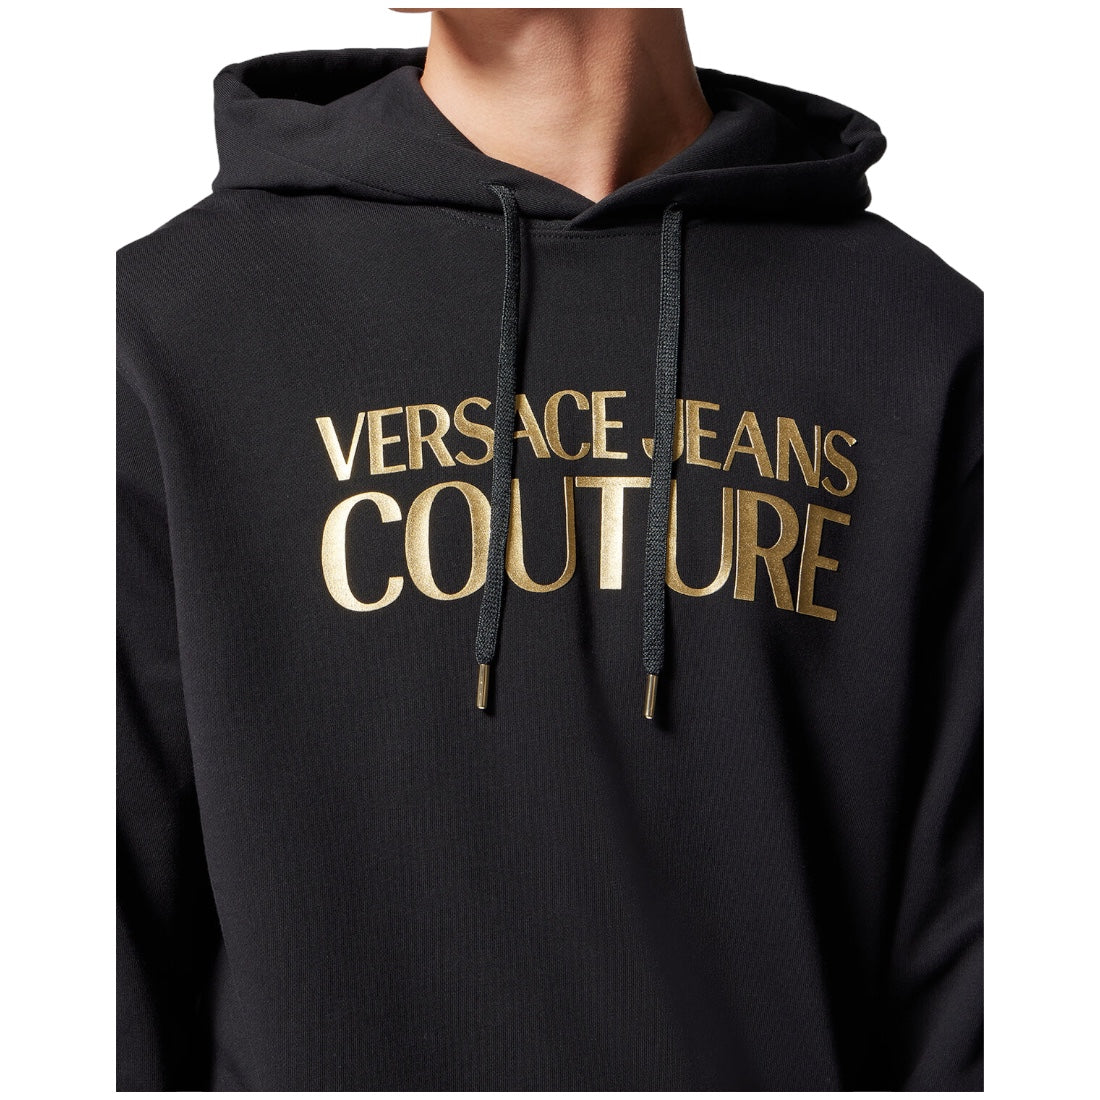 Versace Jeans Couture logo tyk folie hættetrøje